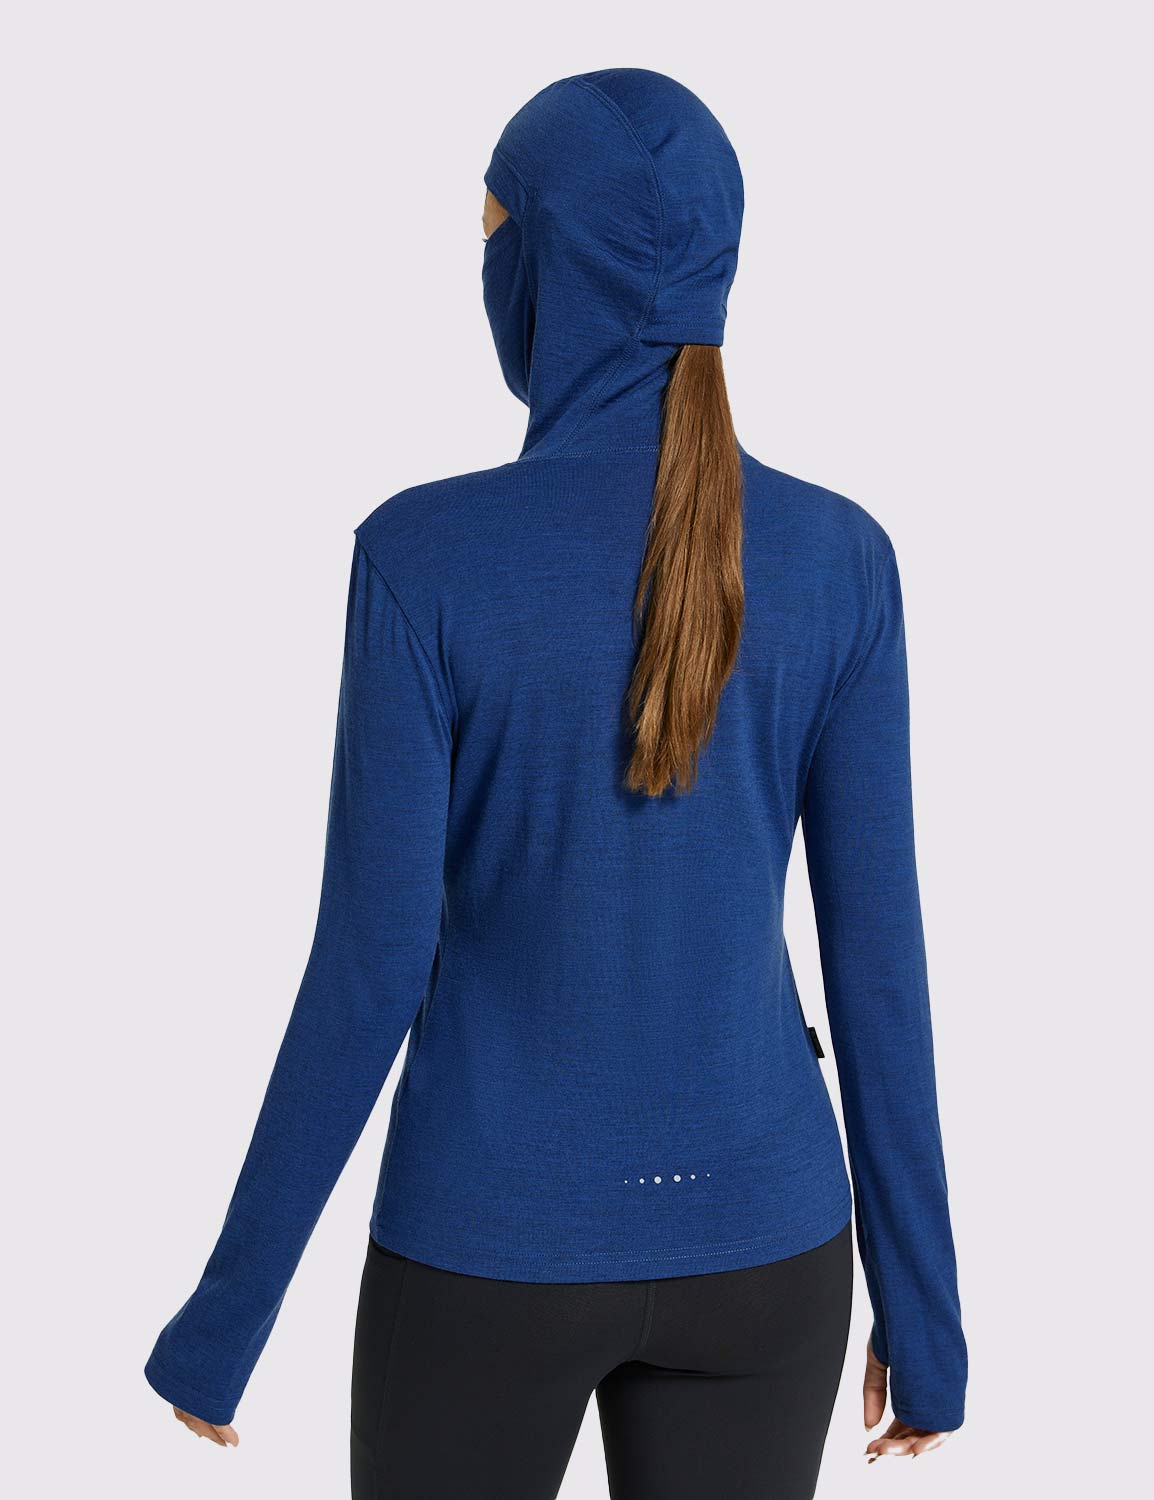 Baleaf Merino Wool Women's Hooded Base Layer Shirts Quartz Blue Back